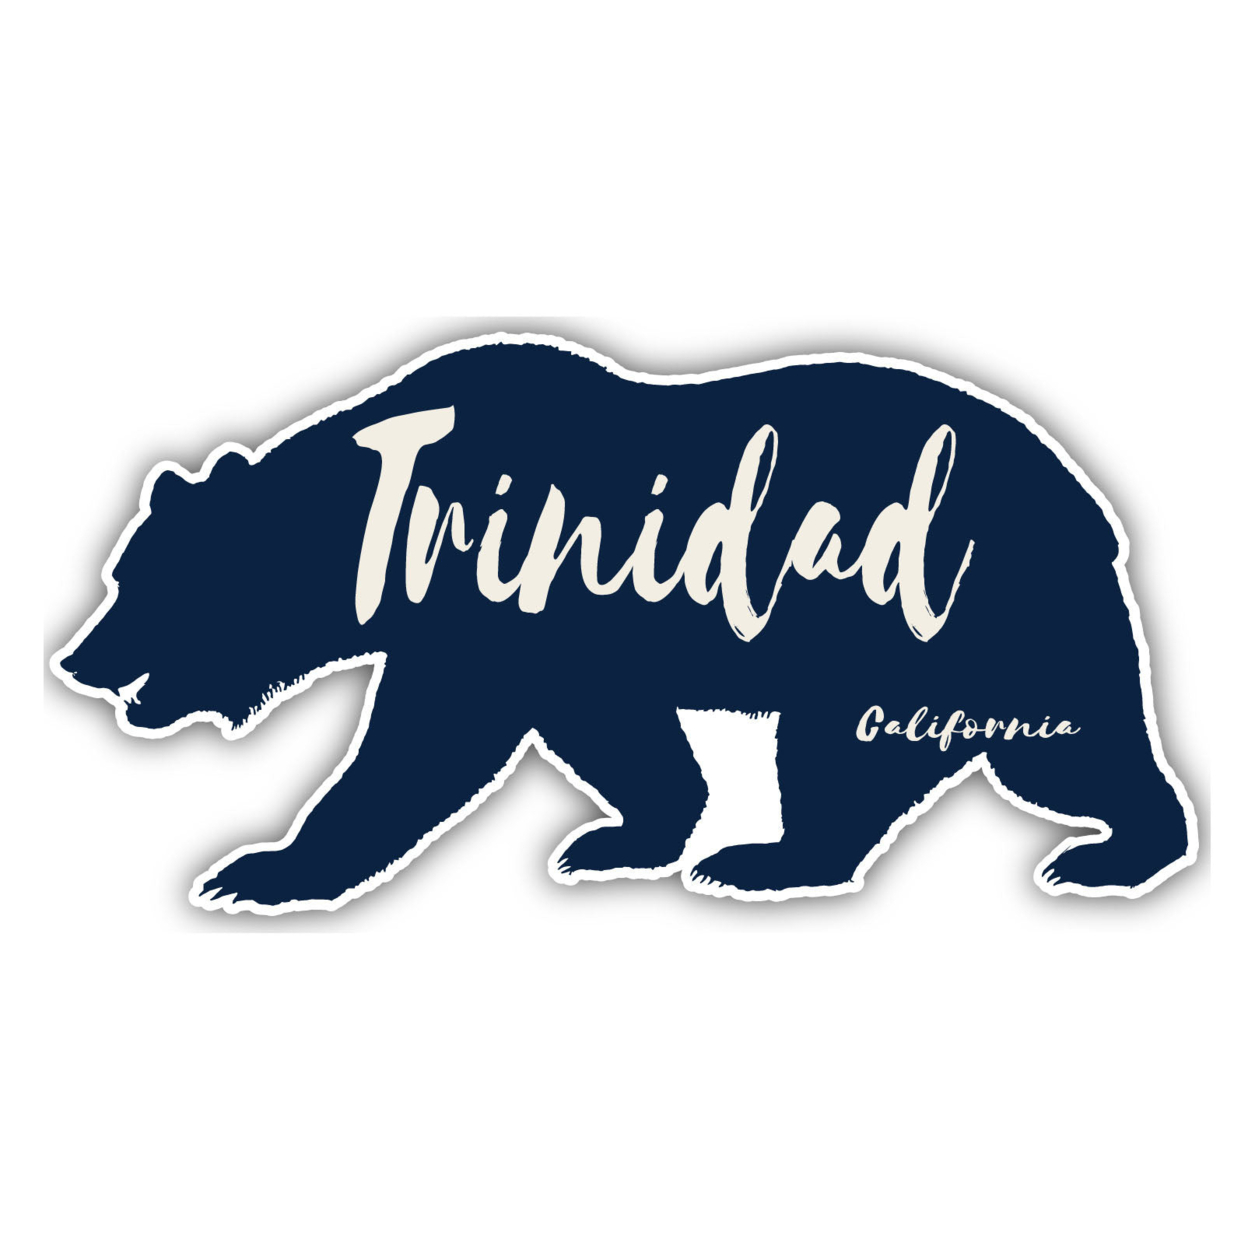 Trinidad California Souvenir Decorative Stickers (Choose Theme And Size) - Single Unit, 4-Inch, Bear